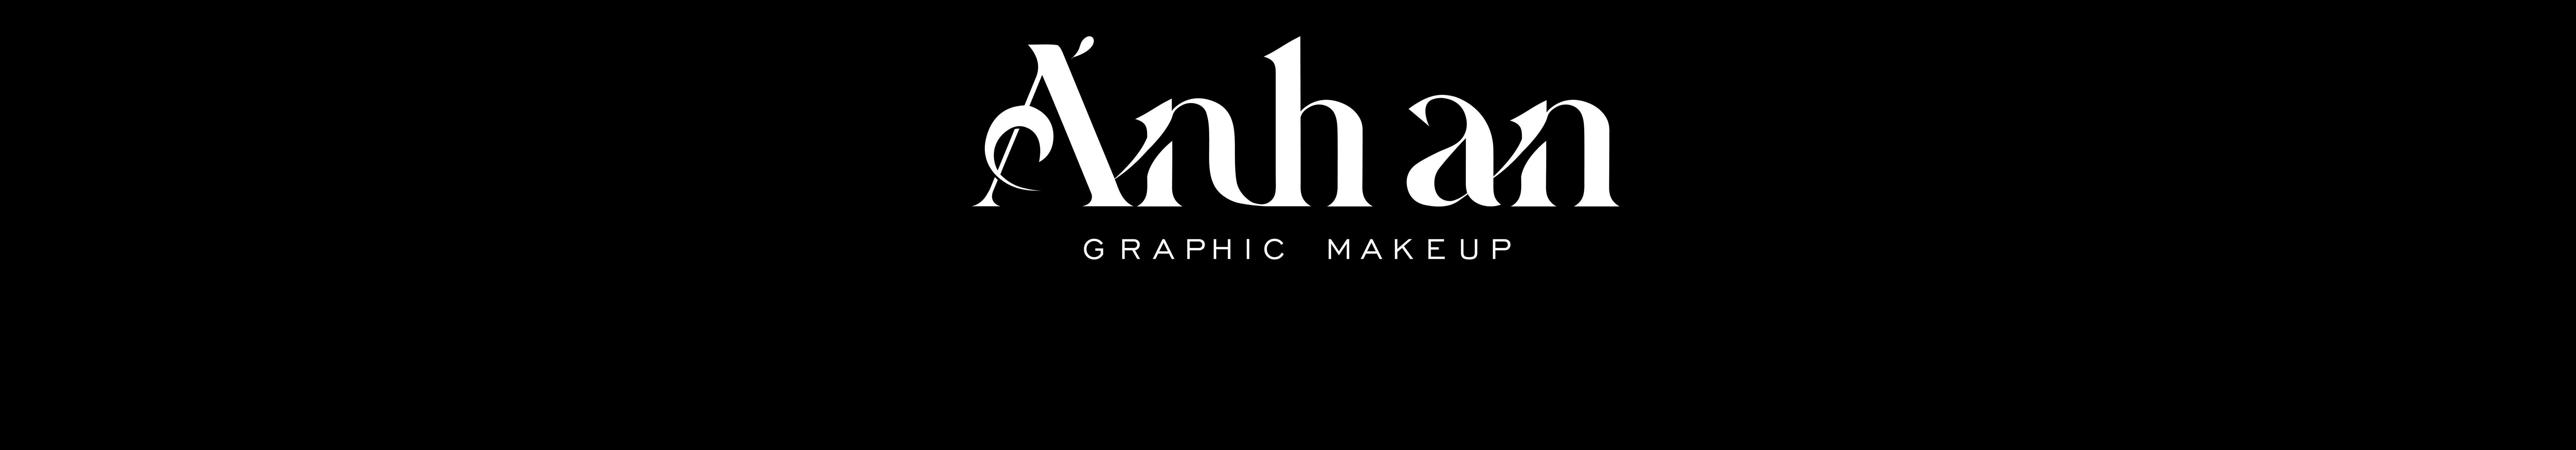 Ánh An Graphic Makeup's profile banner